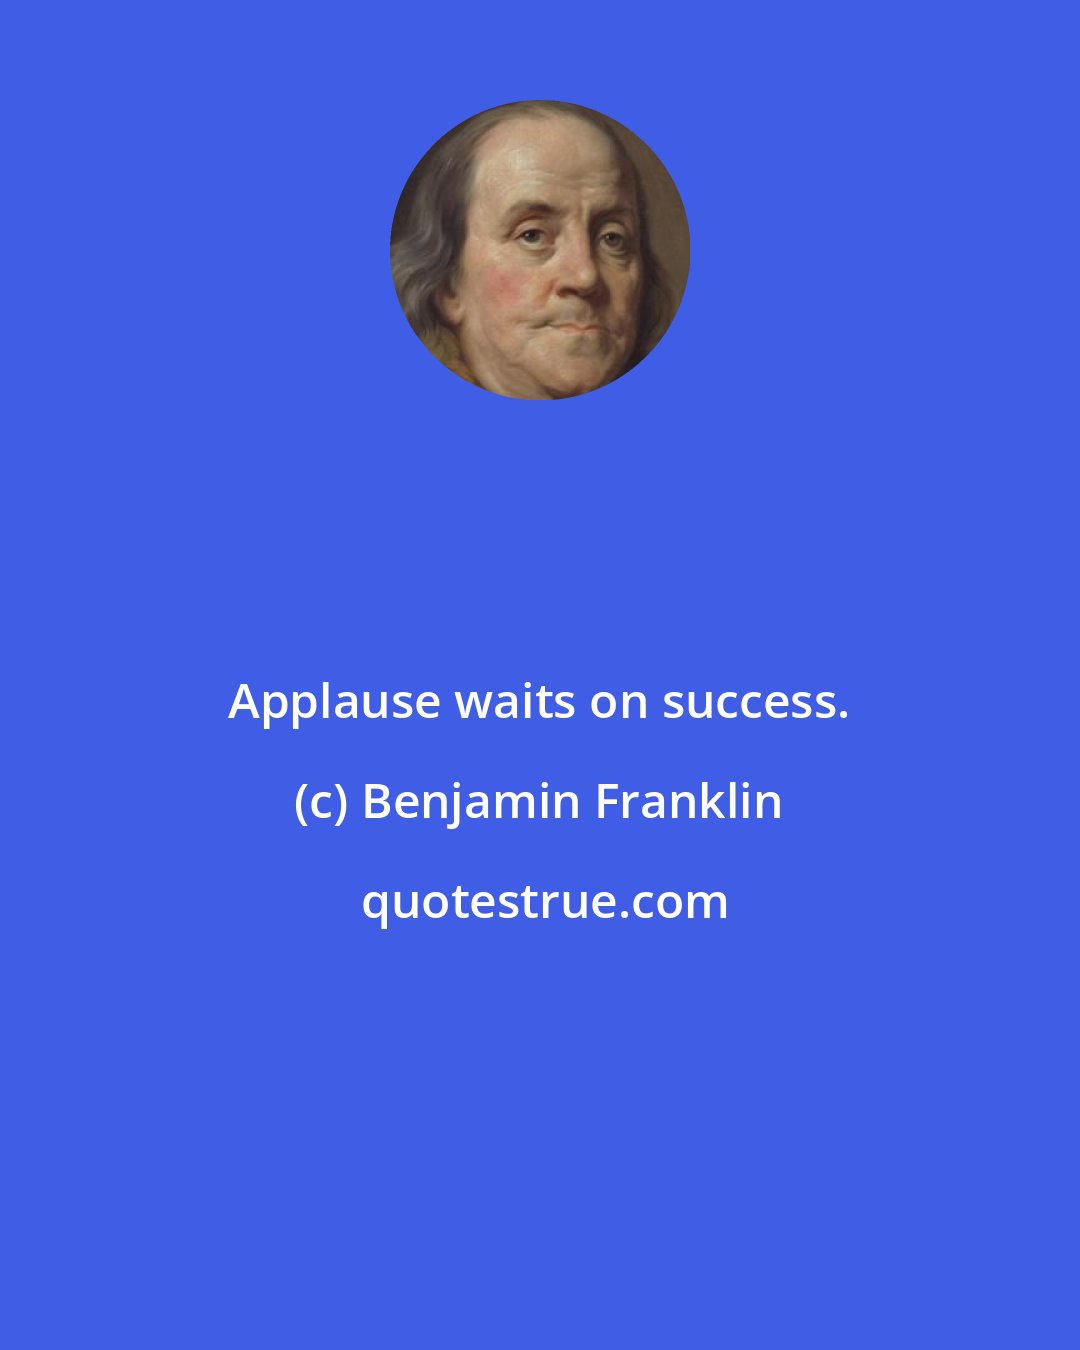 Benjamin Franklin: Applause waits on success.